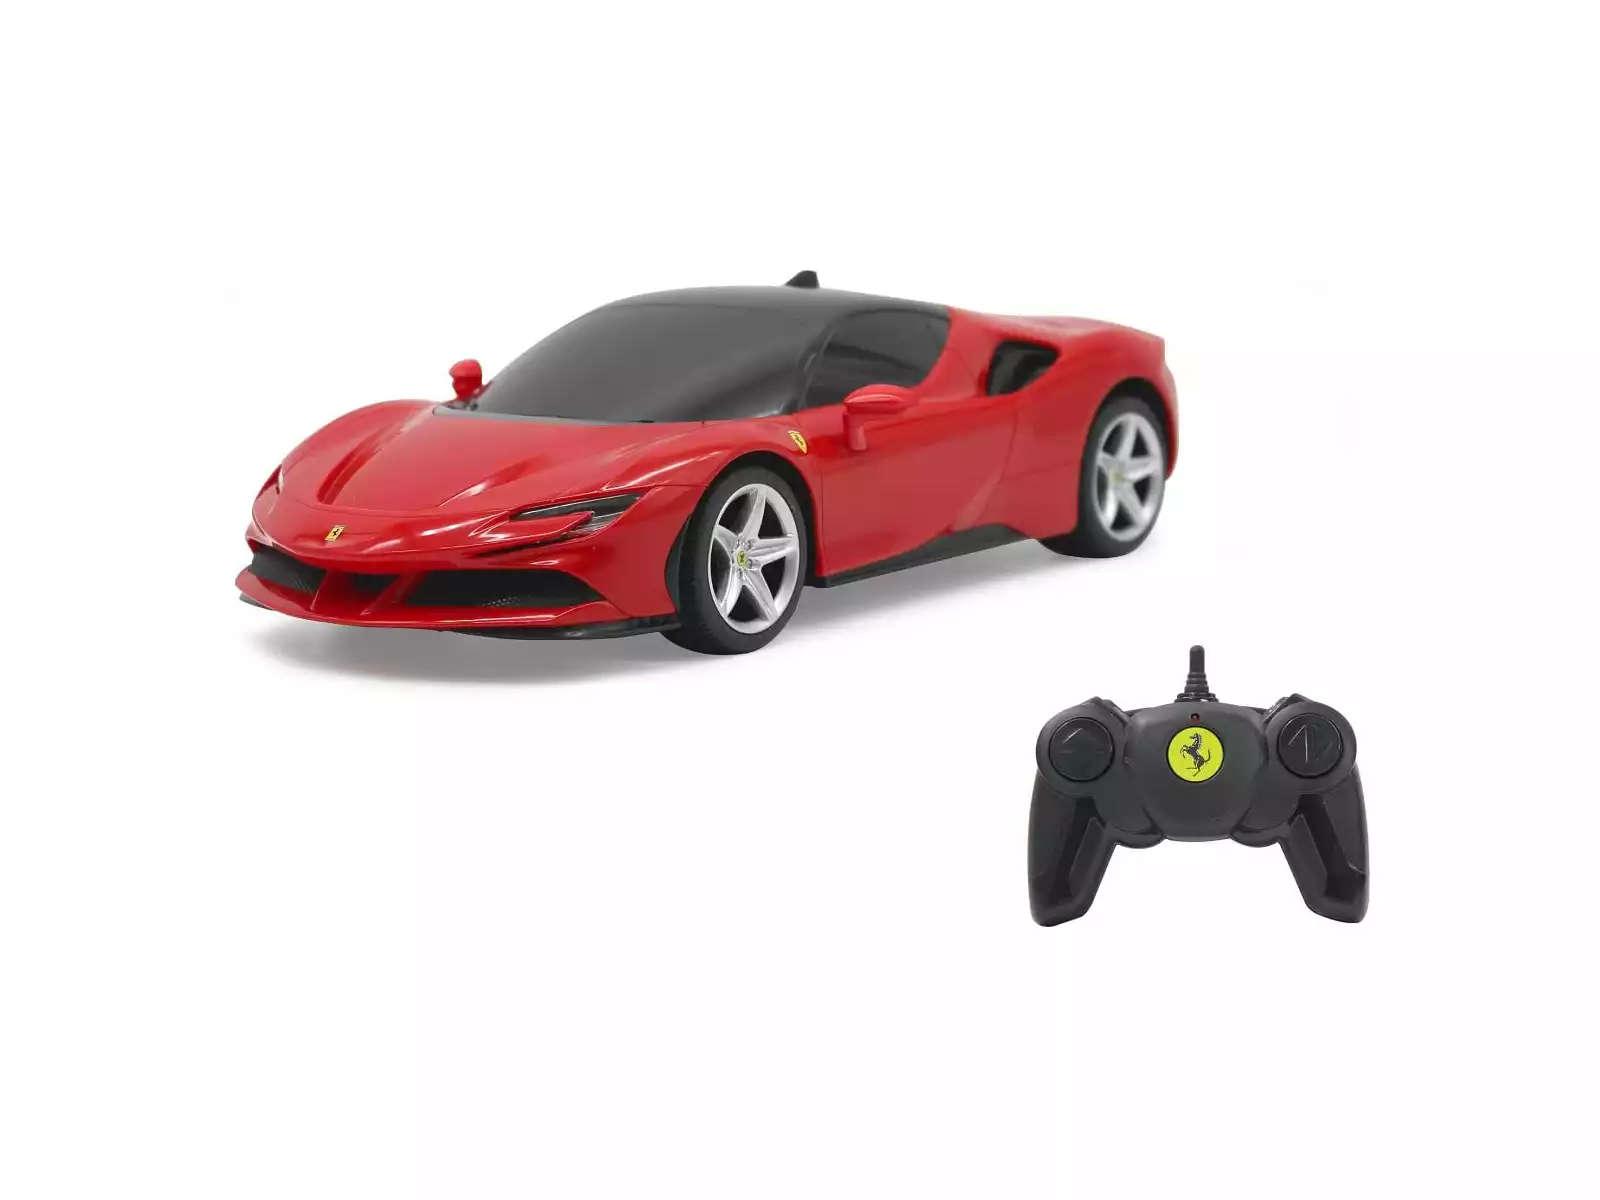 Acheter Télécommande 1:14 Ferrari Aperta En Noir - Juguetilandia